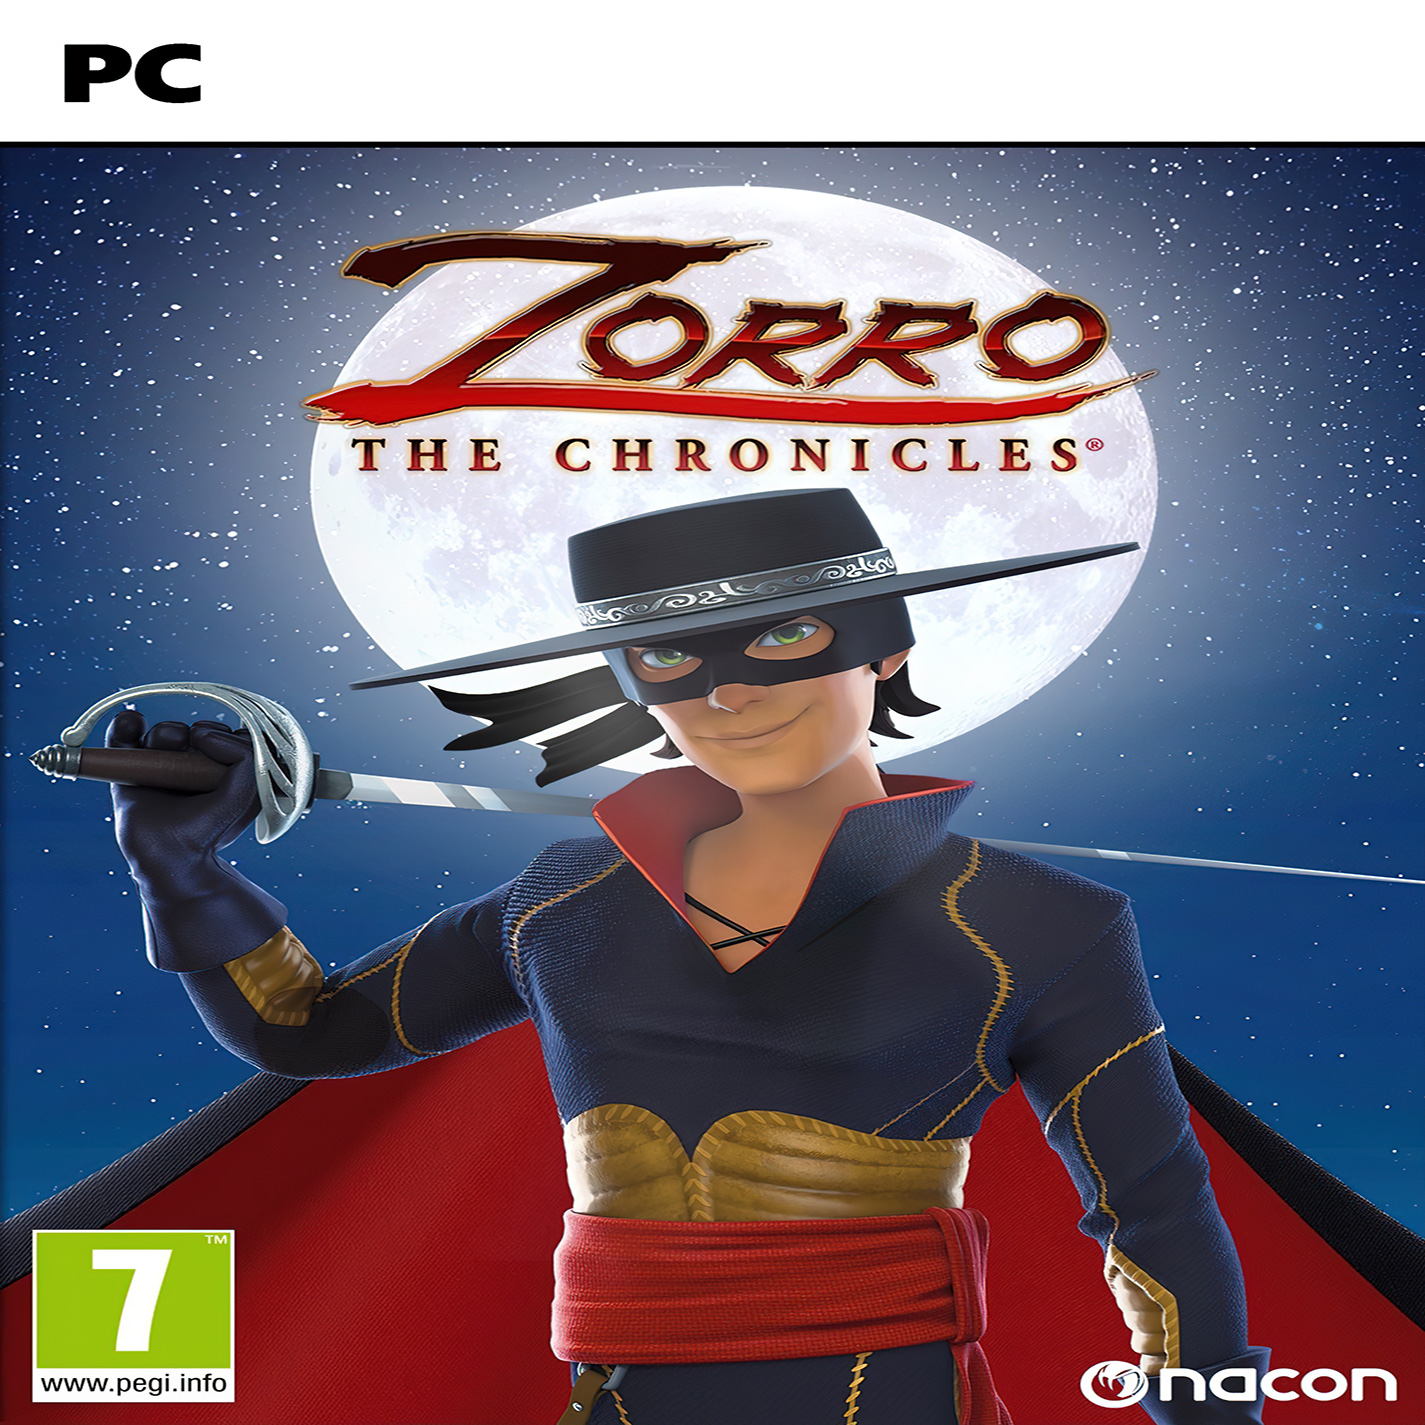 Zorro: The Chronicles - predn CD obal